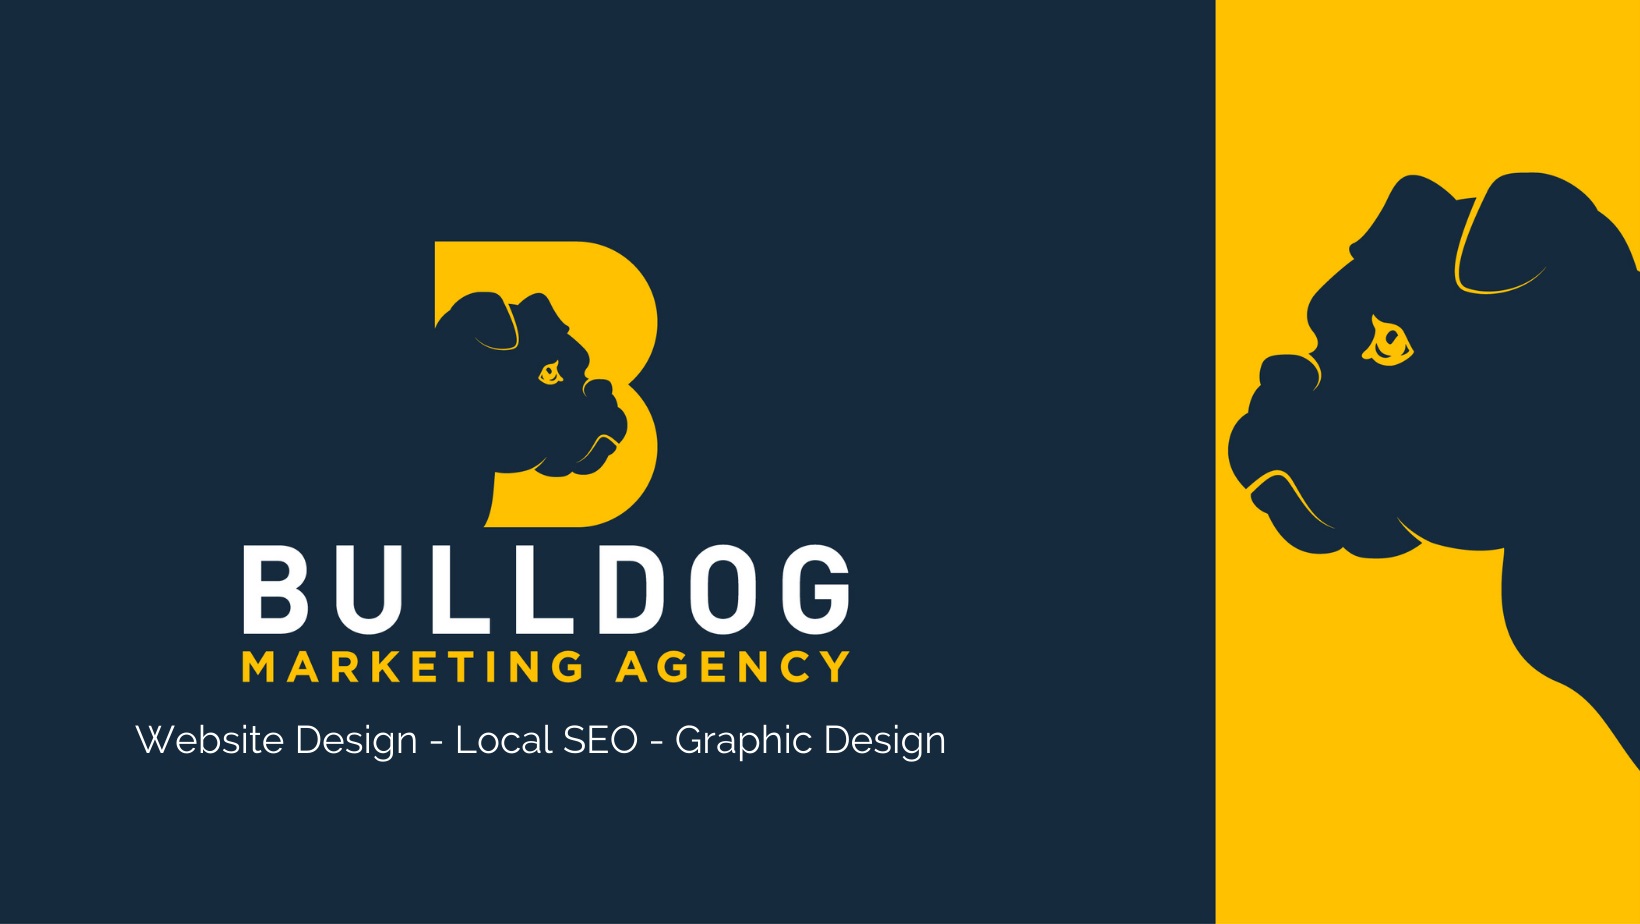 BullDog Marketing Agency